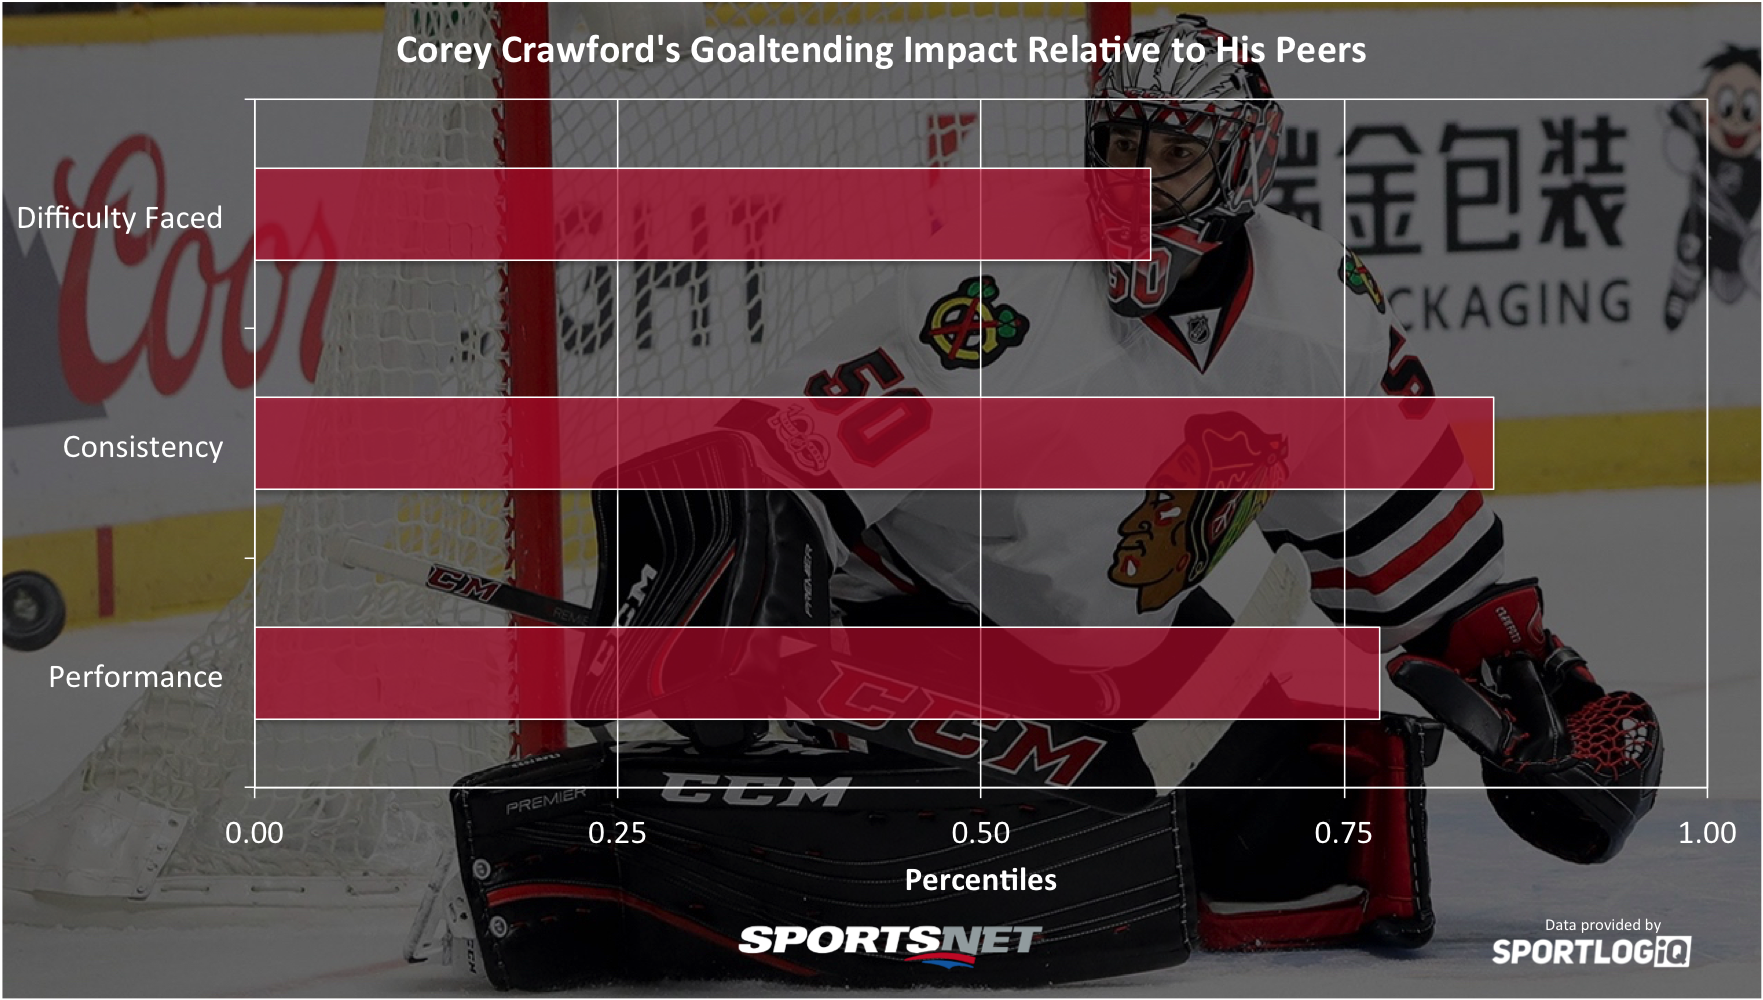 InGoal Magazine on Instagram: Corey Crawford's New Jersey Devils